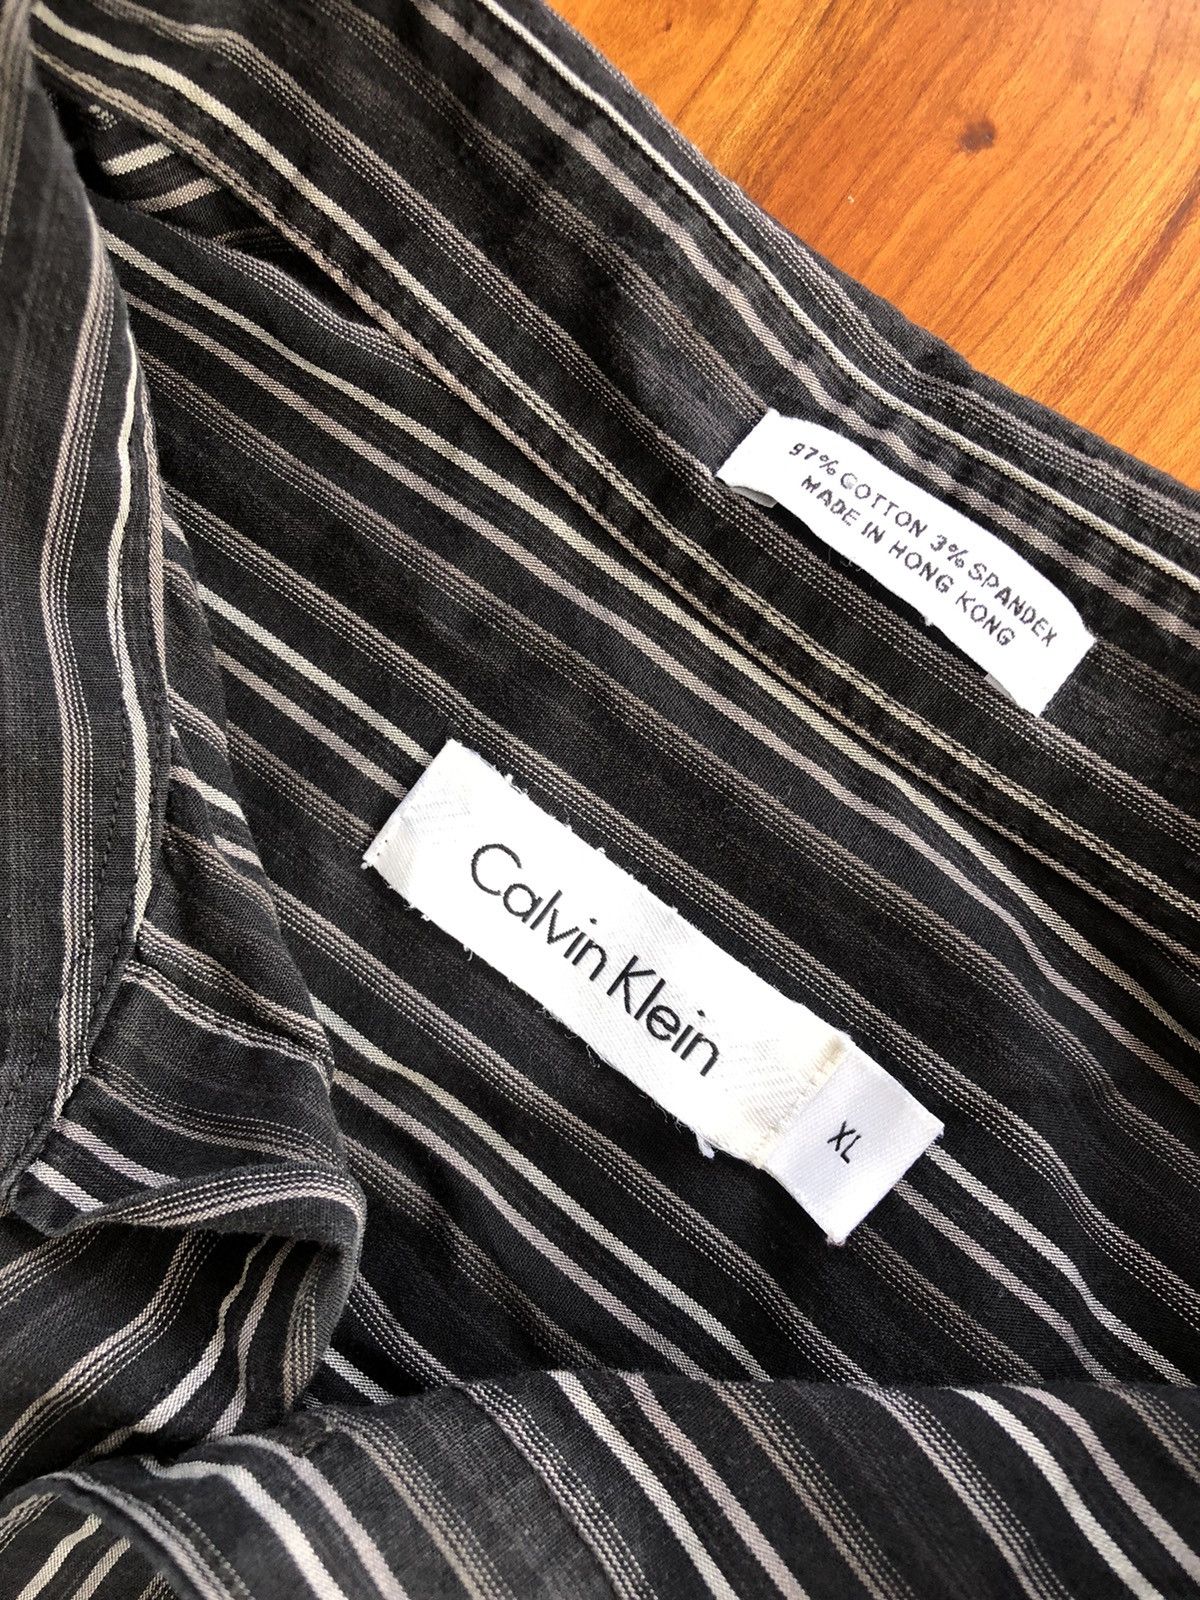 Calvin Klein Calvin Klein Black Striped Shirt Size US XL / EU 56 / 4 - 7 Preview